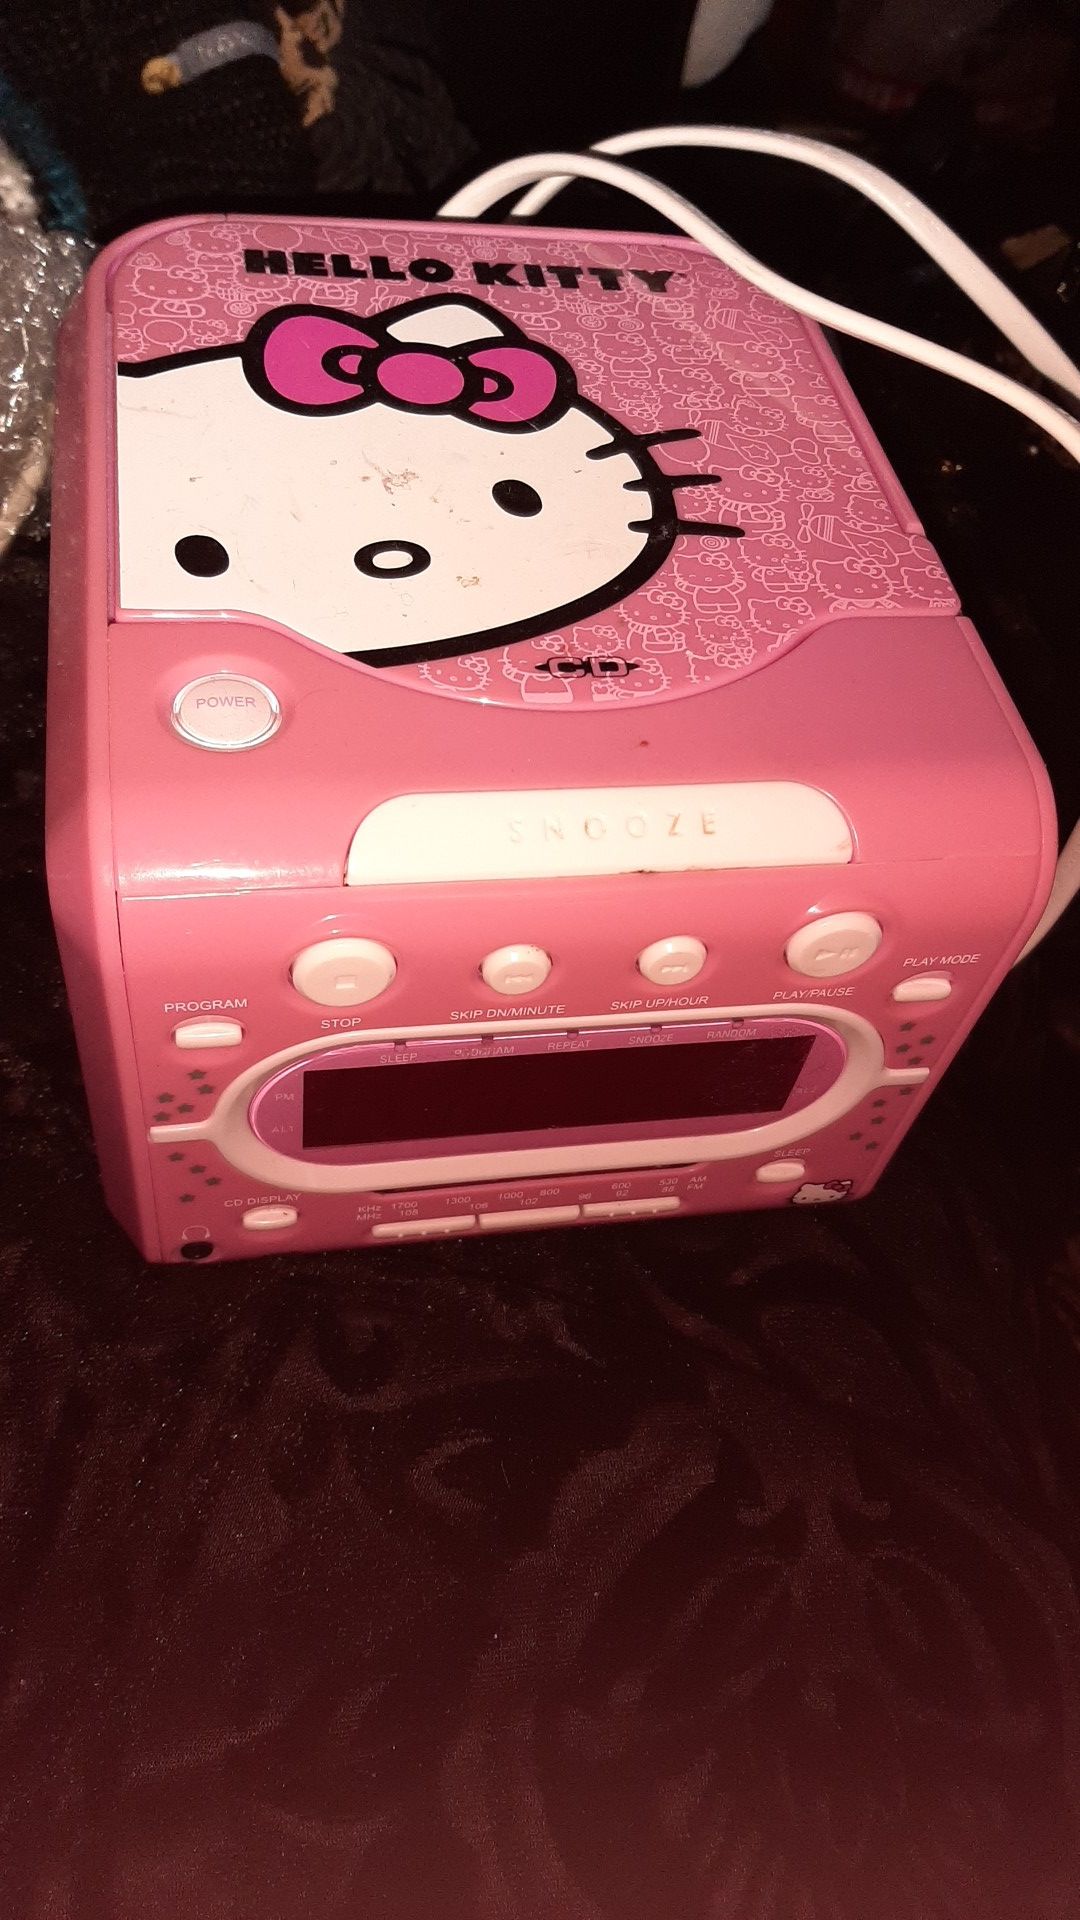 Hello kitty cd and am/fm radio alarm clock